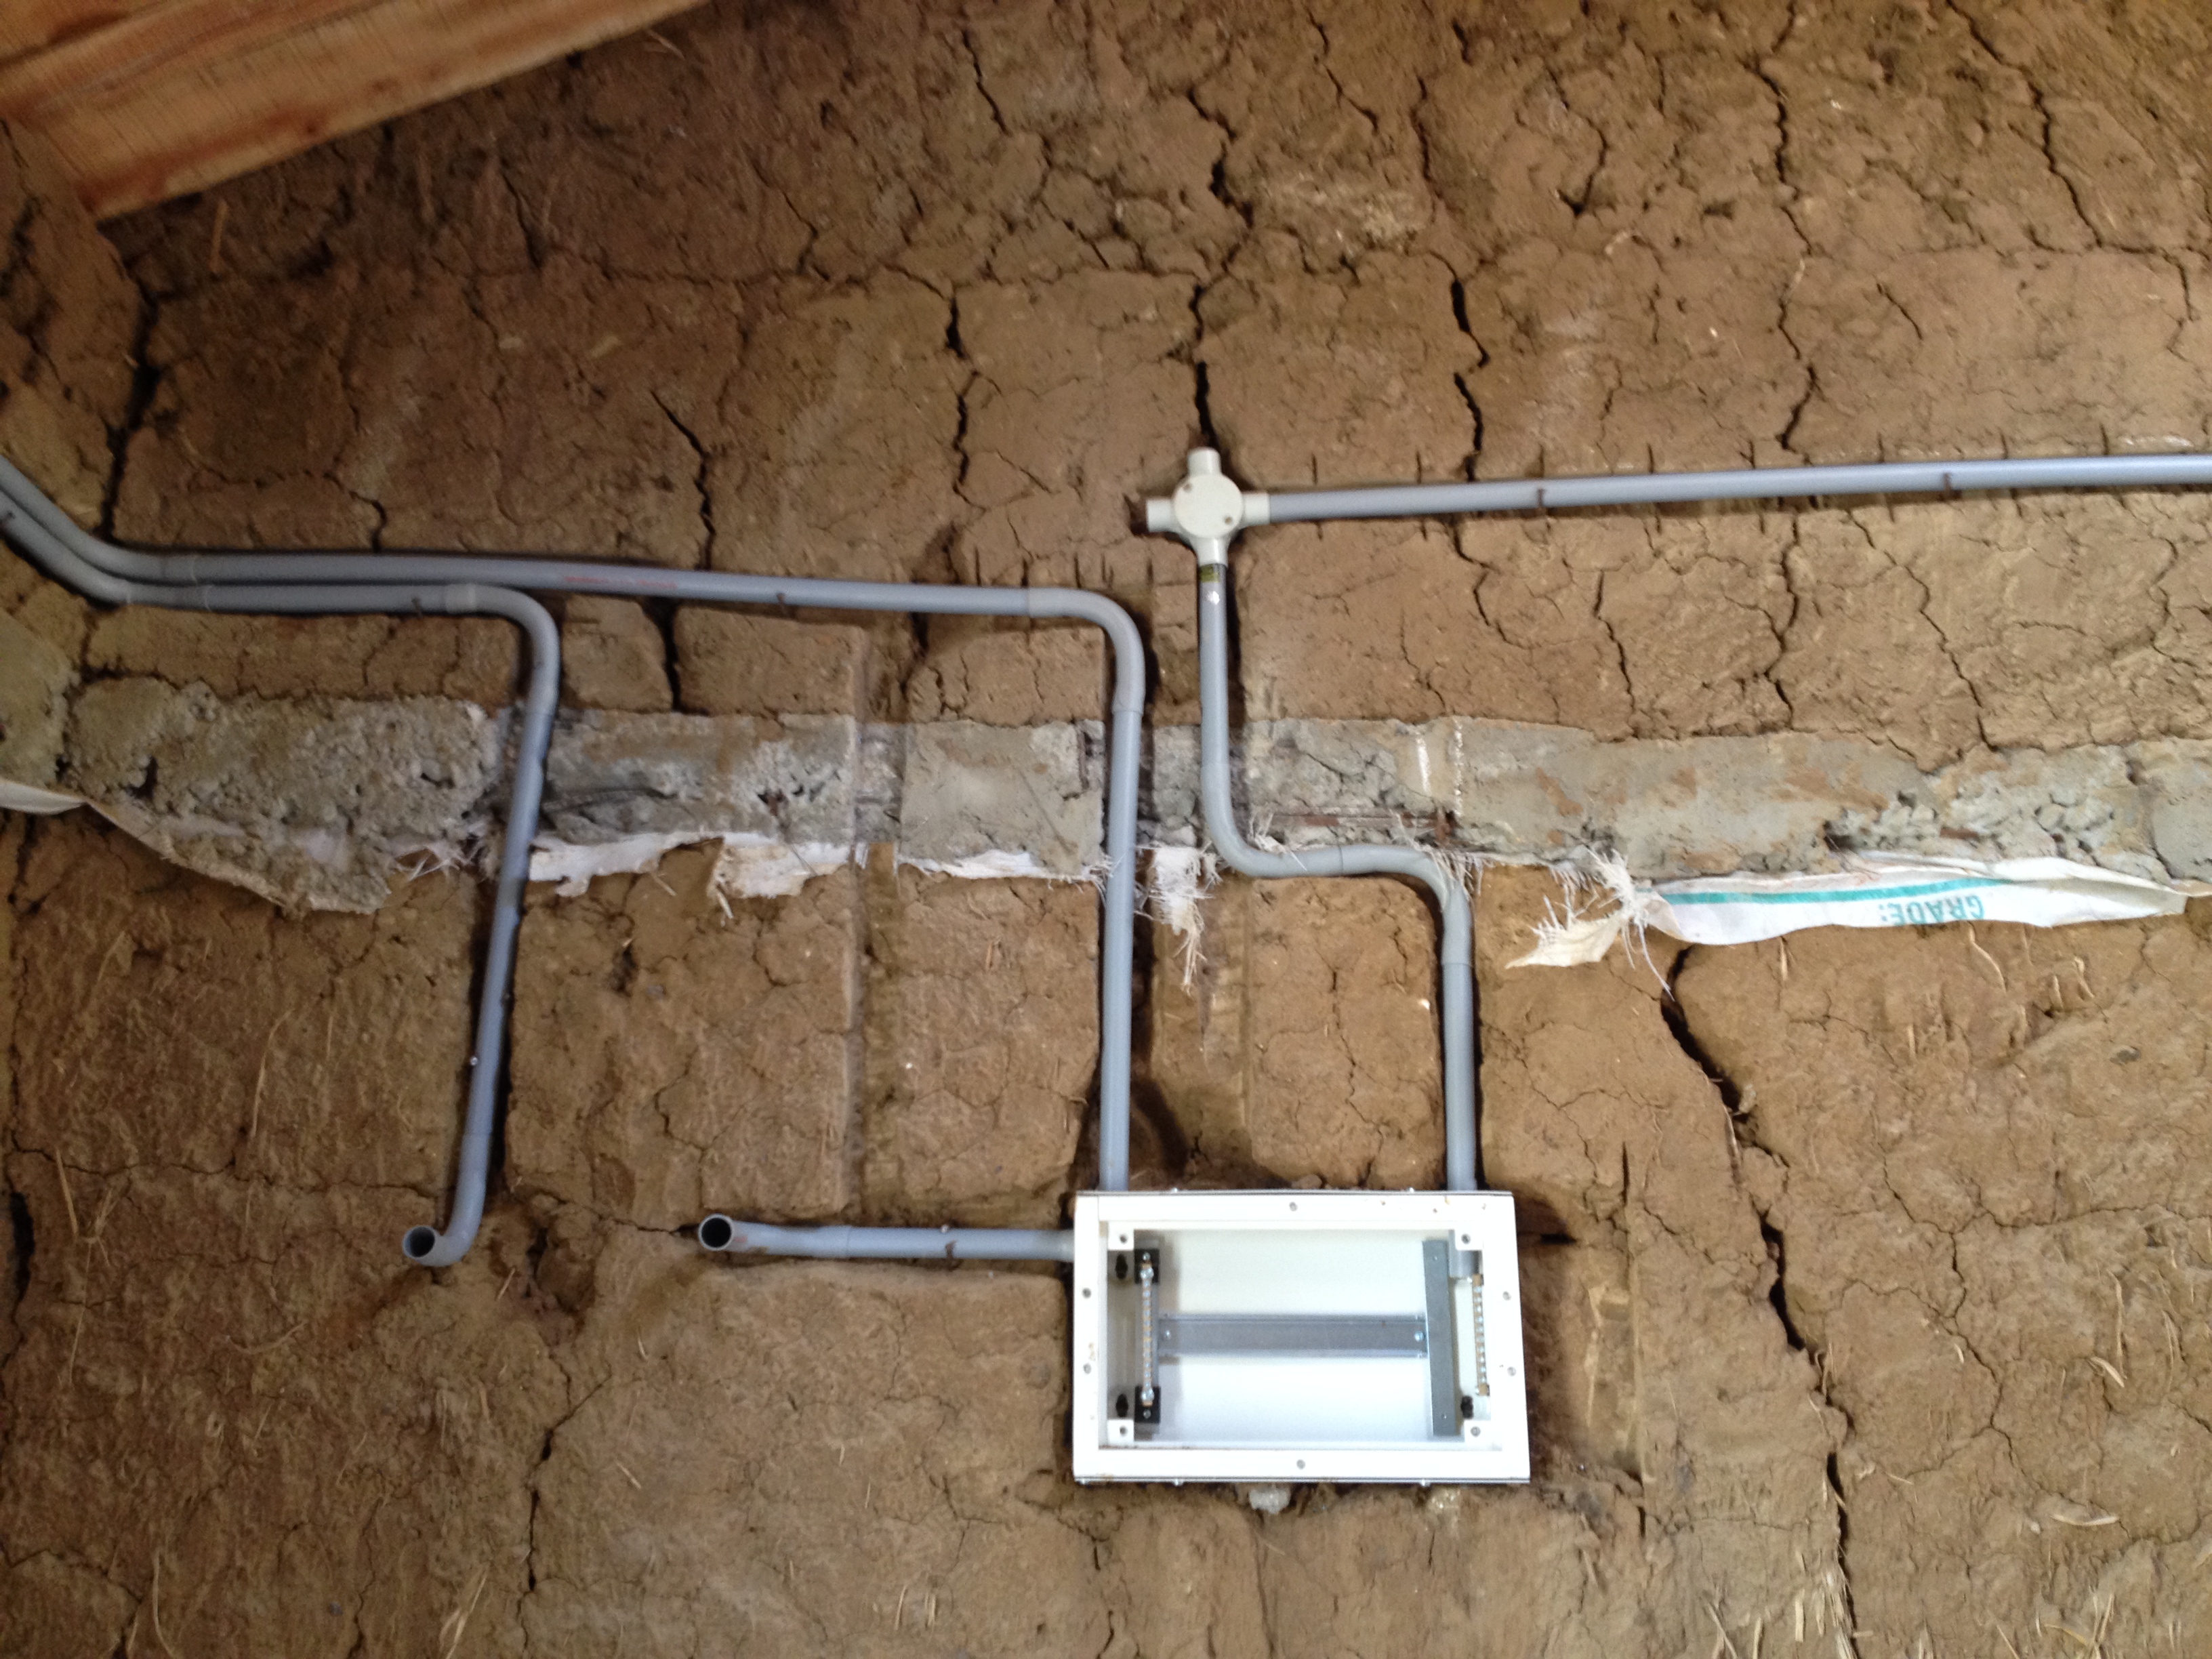 https://sidmenonarchitect.files.wordpress.com/2015/07/electrical-conduits-in-mud-wall-pre-plaster.jpg